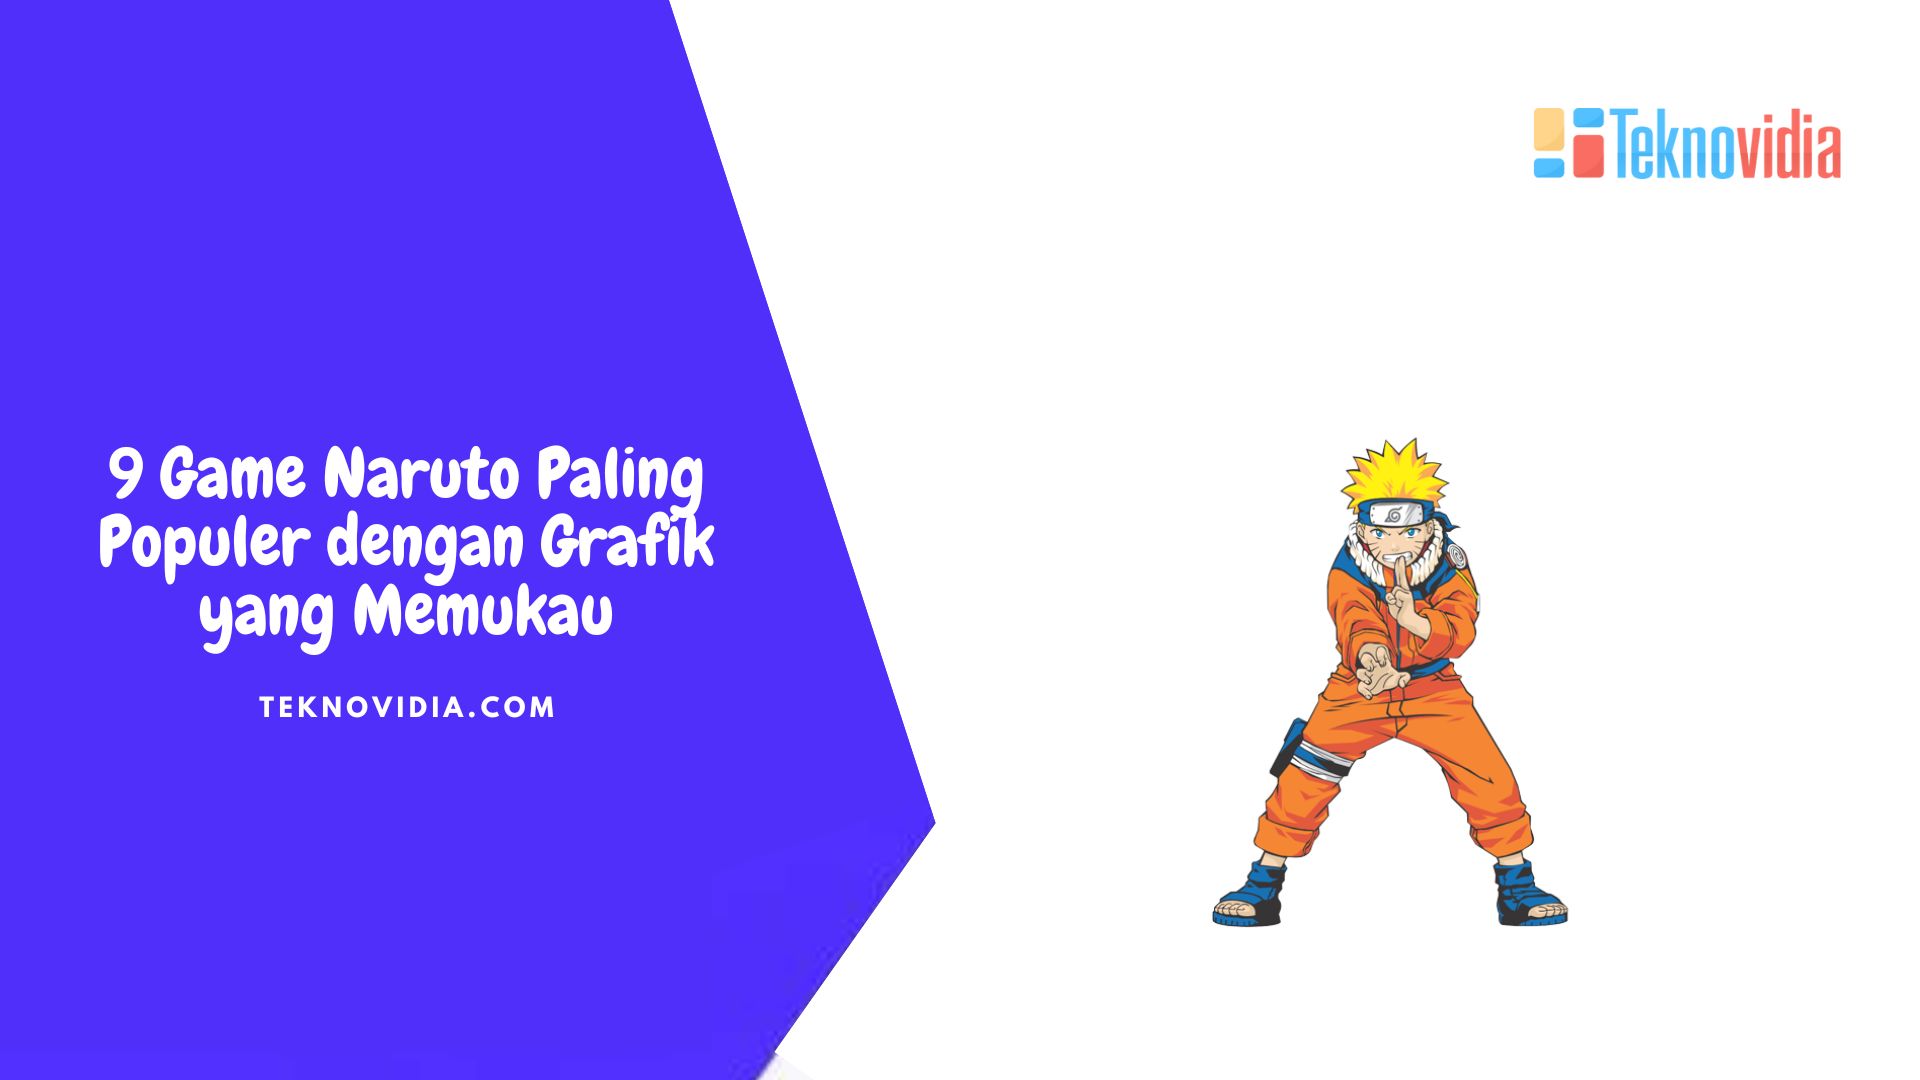 9 Game Naruto Paling Populer dengan Grafik yang Memukau